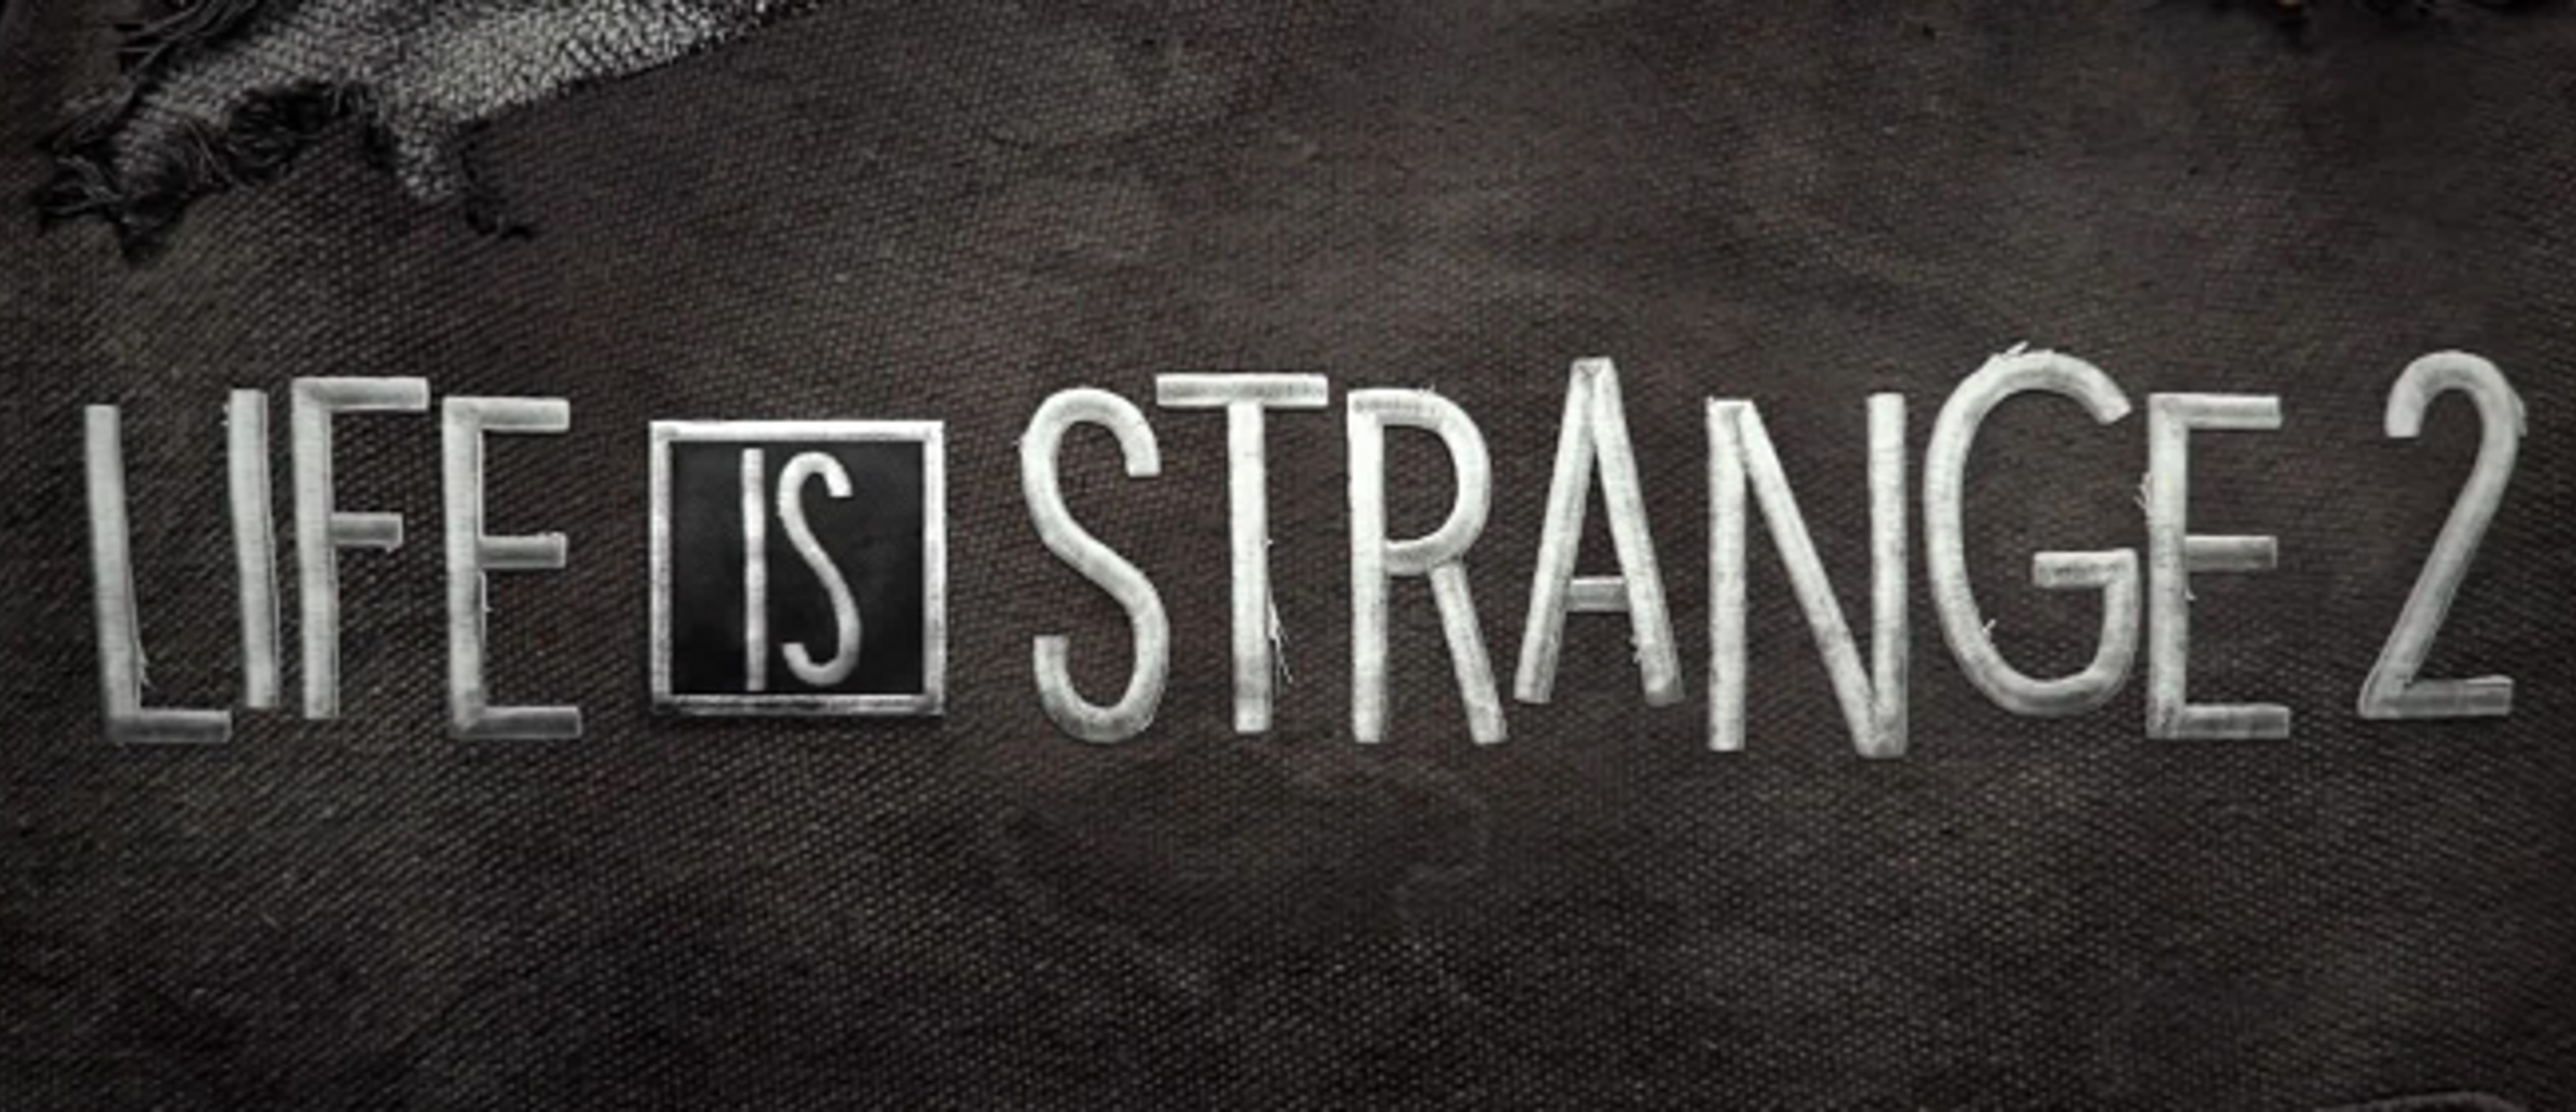 Life is life international. Life is Strange 2 (2018). Life is Strange 2 логотип. Life is Strange 2 эпизод 1 лого. Life is Strange надпись.